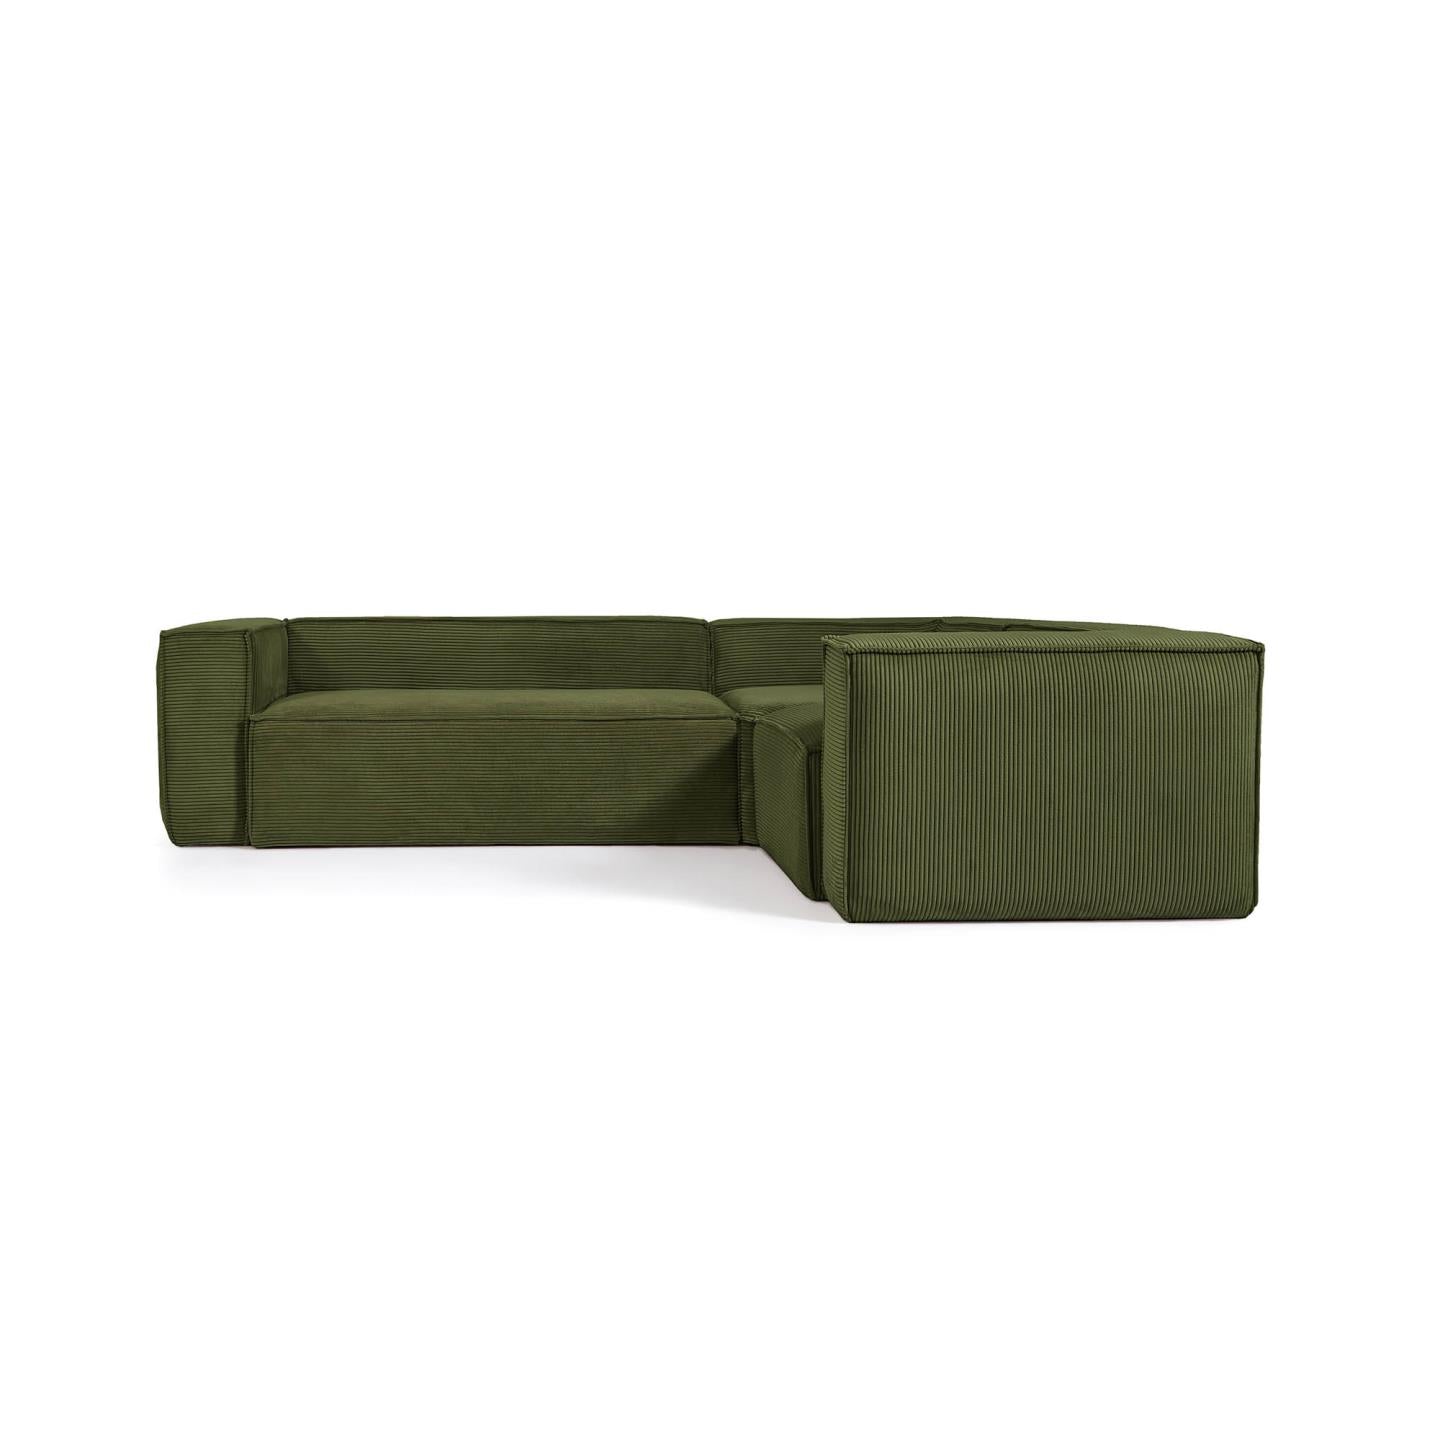 Blok 3 seater corner sofa in green wide seam corduroy, 290 x 230 cm / 230 cm 290 cm